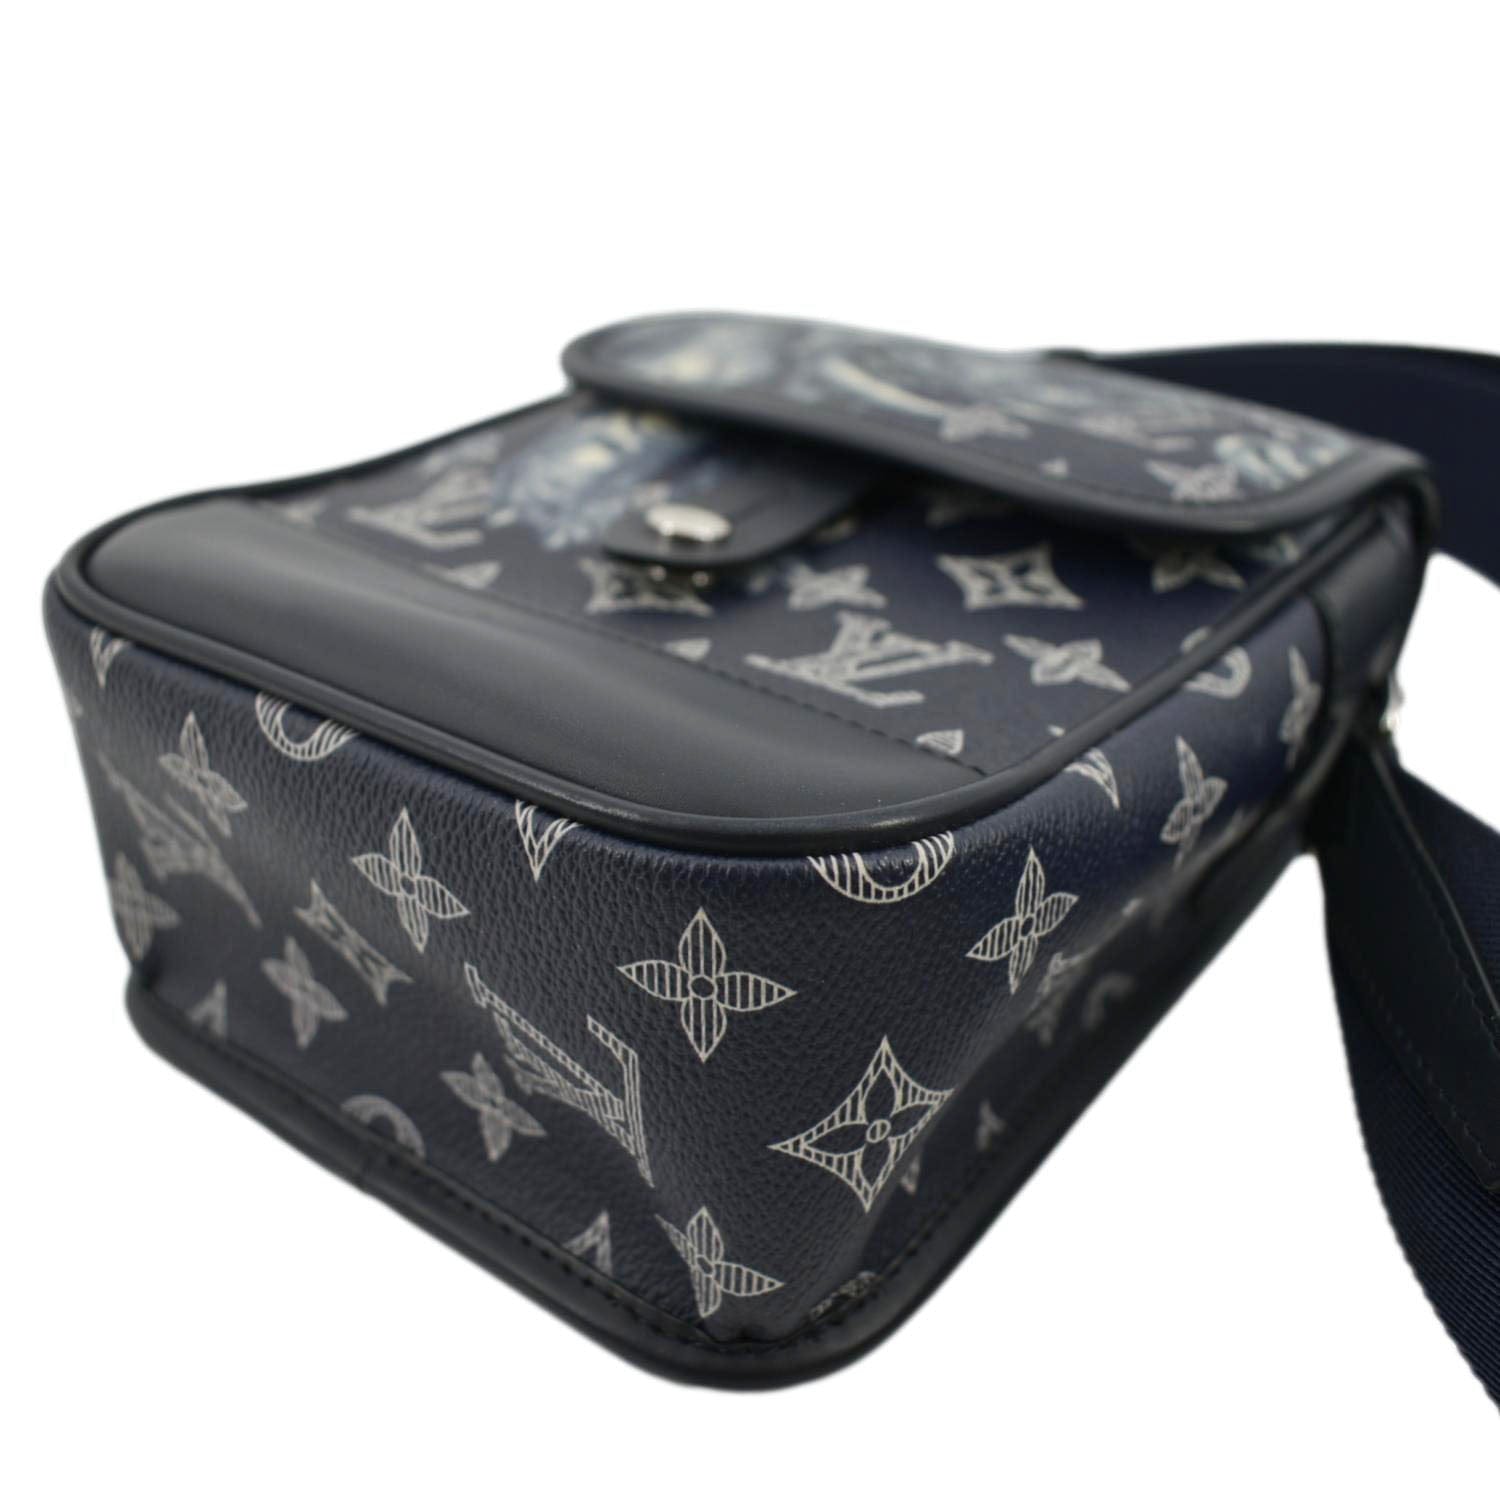 Louis Vuitton Monogram Savanna Elephant Chapman Brothers Shoulder Bag US